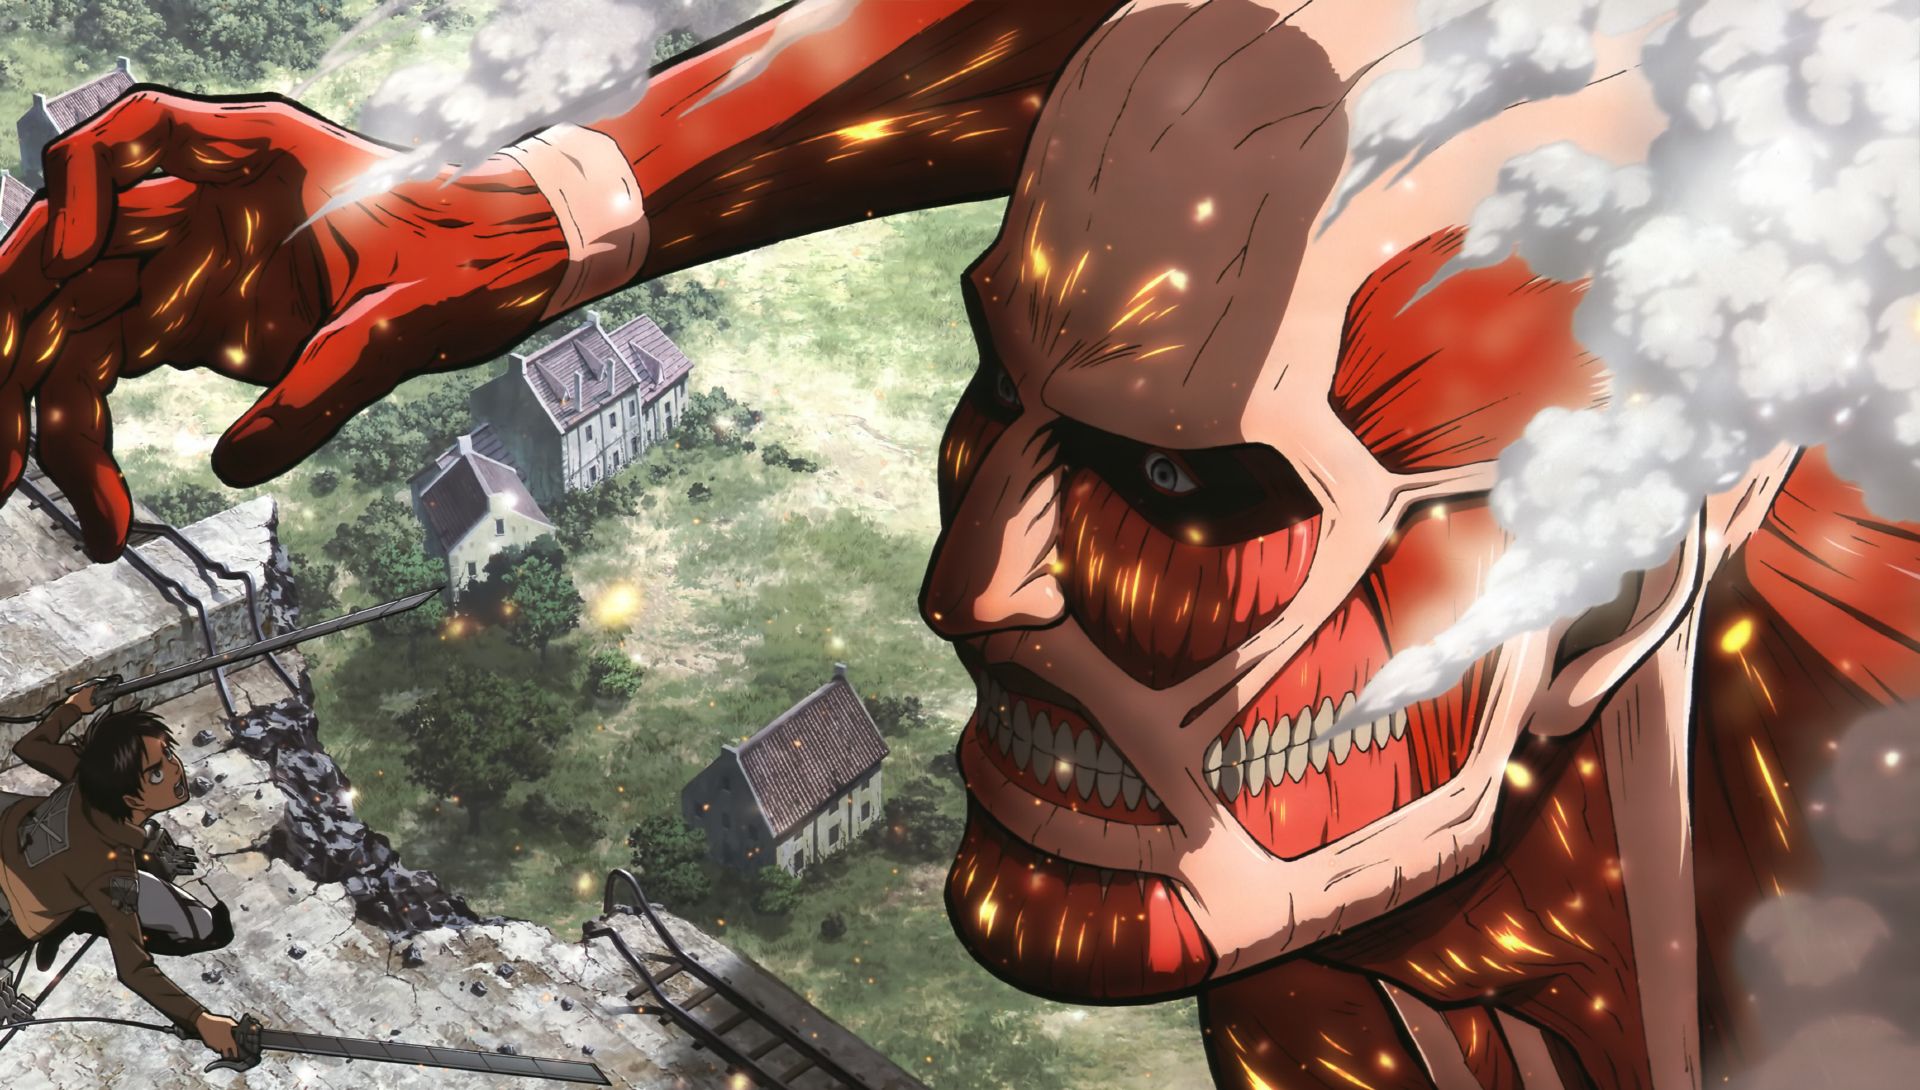 3 Real Places That Resemble Attack On Titan (Shingeki No Kyojin)